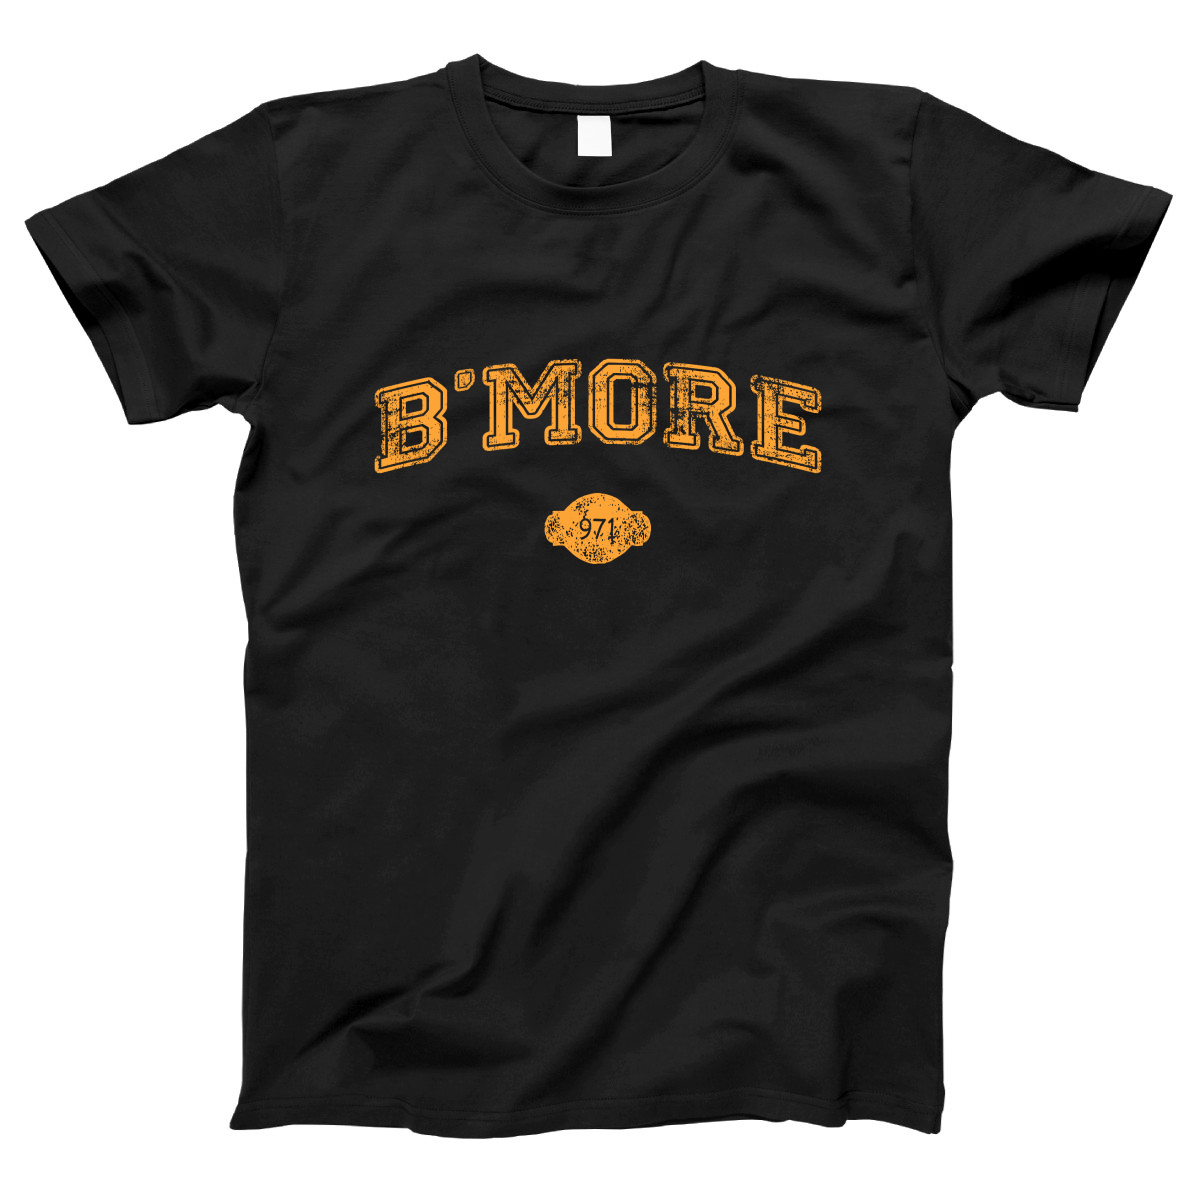 B'more 1729 Represent Women's T-shirt | Black